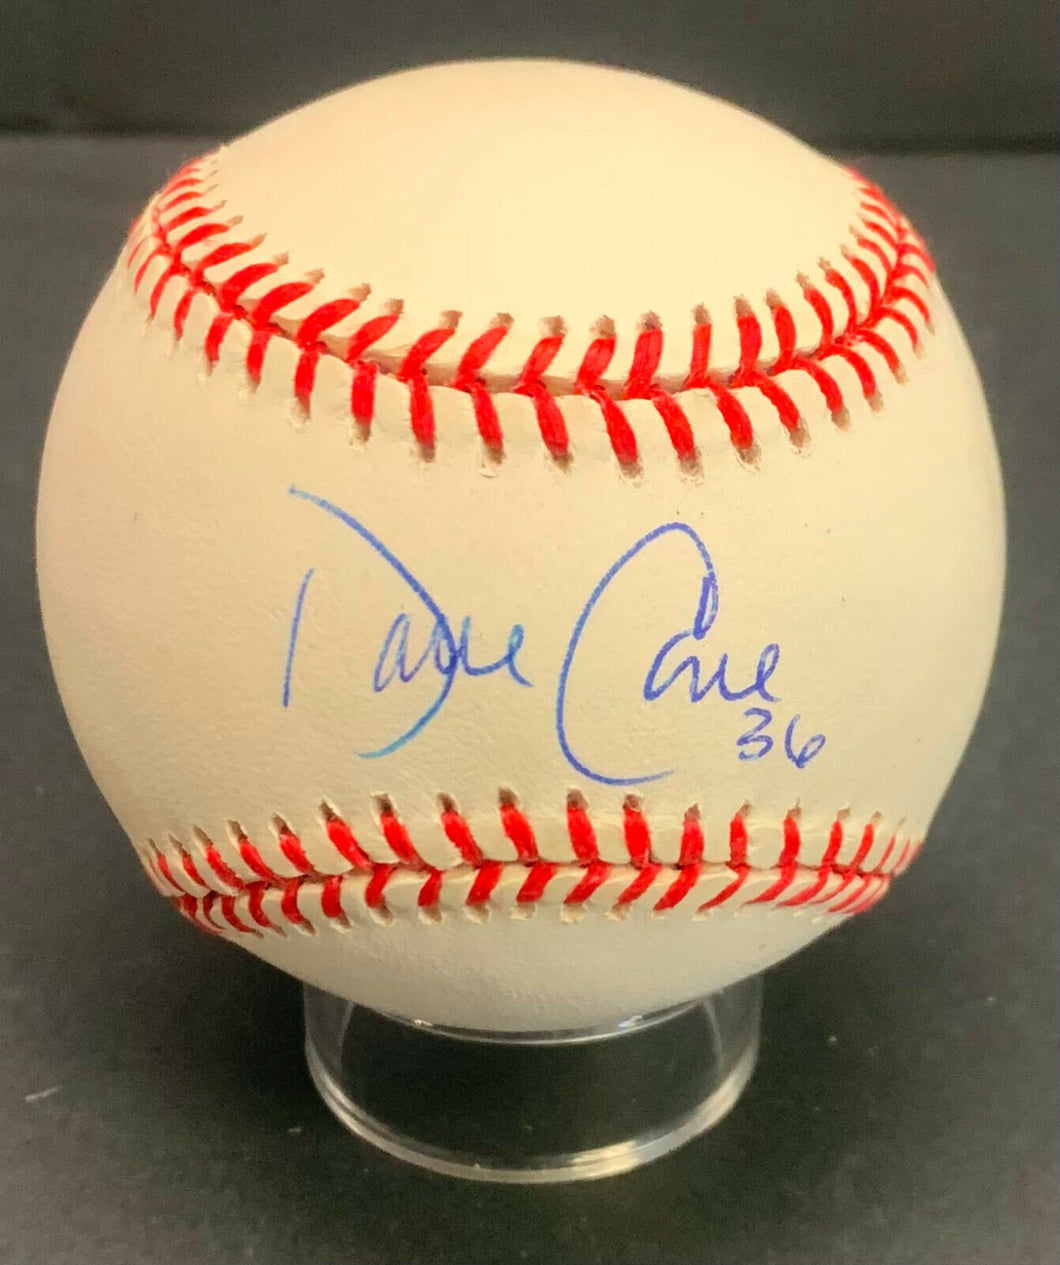 David Cone Autographed Baseball Signed American League Rawlings Sweet Spot